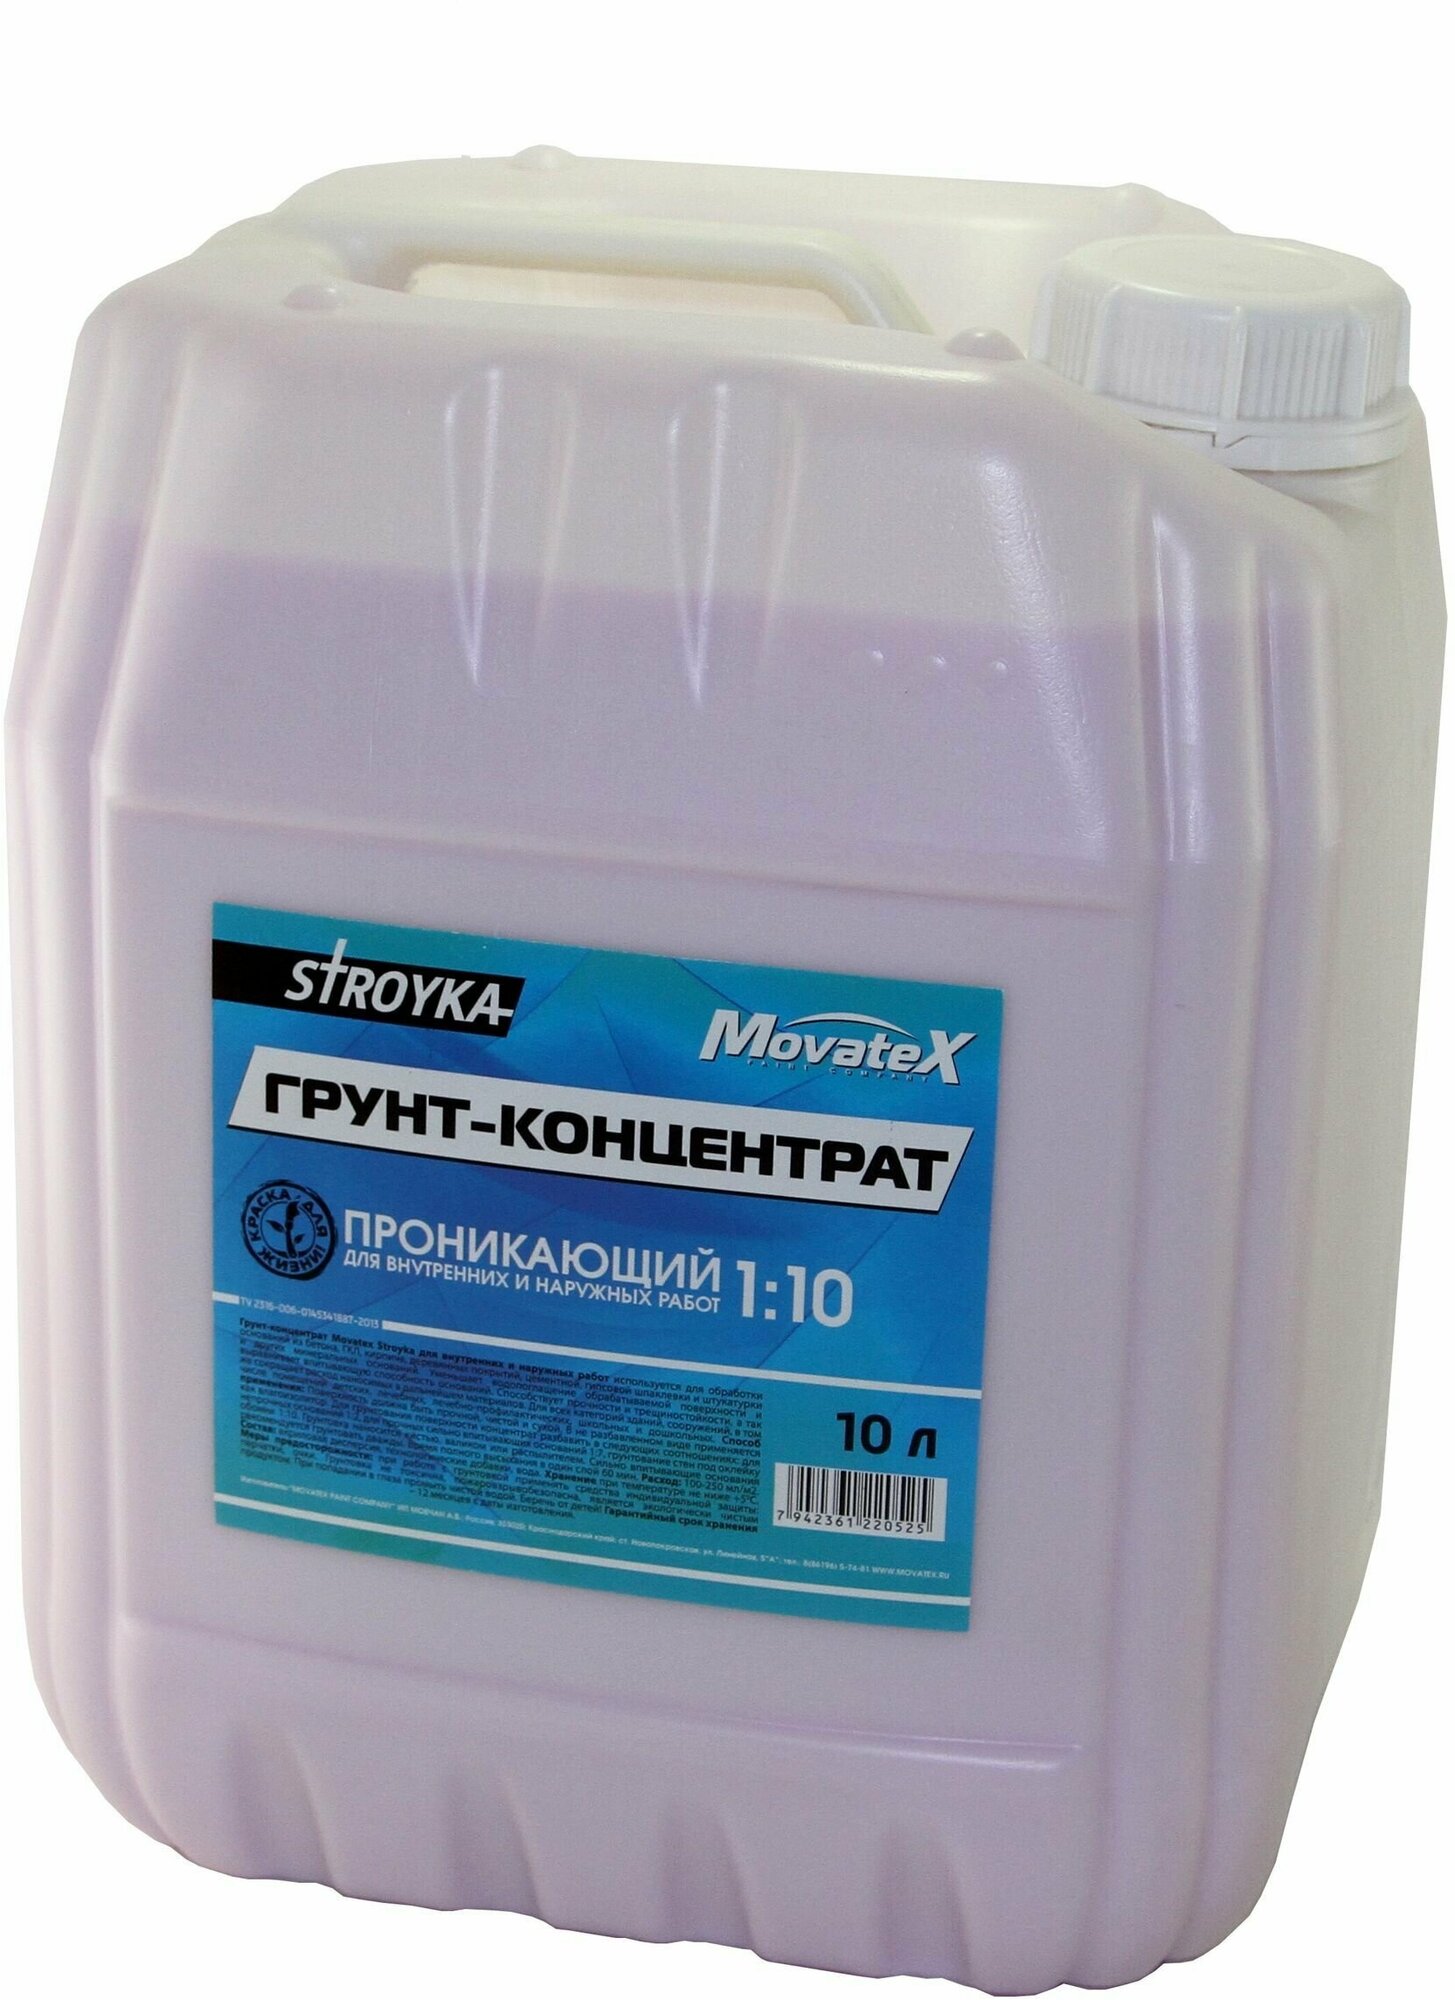 Movatex Грунт-концентрат Stroyka наружних и внутренних работ 10л Т32044